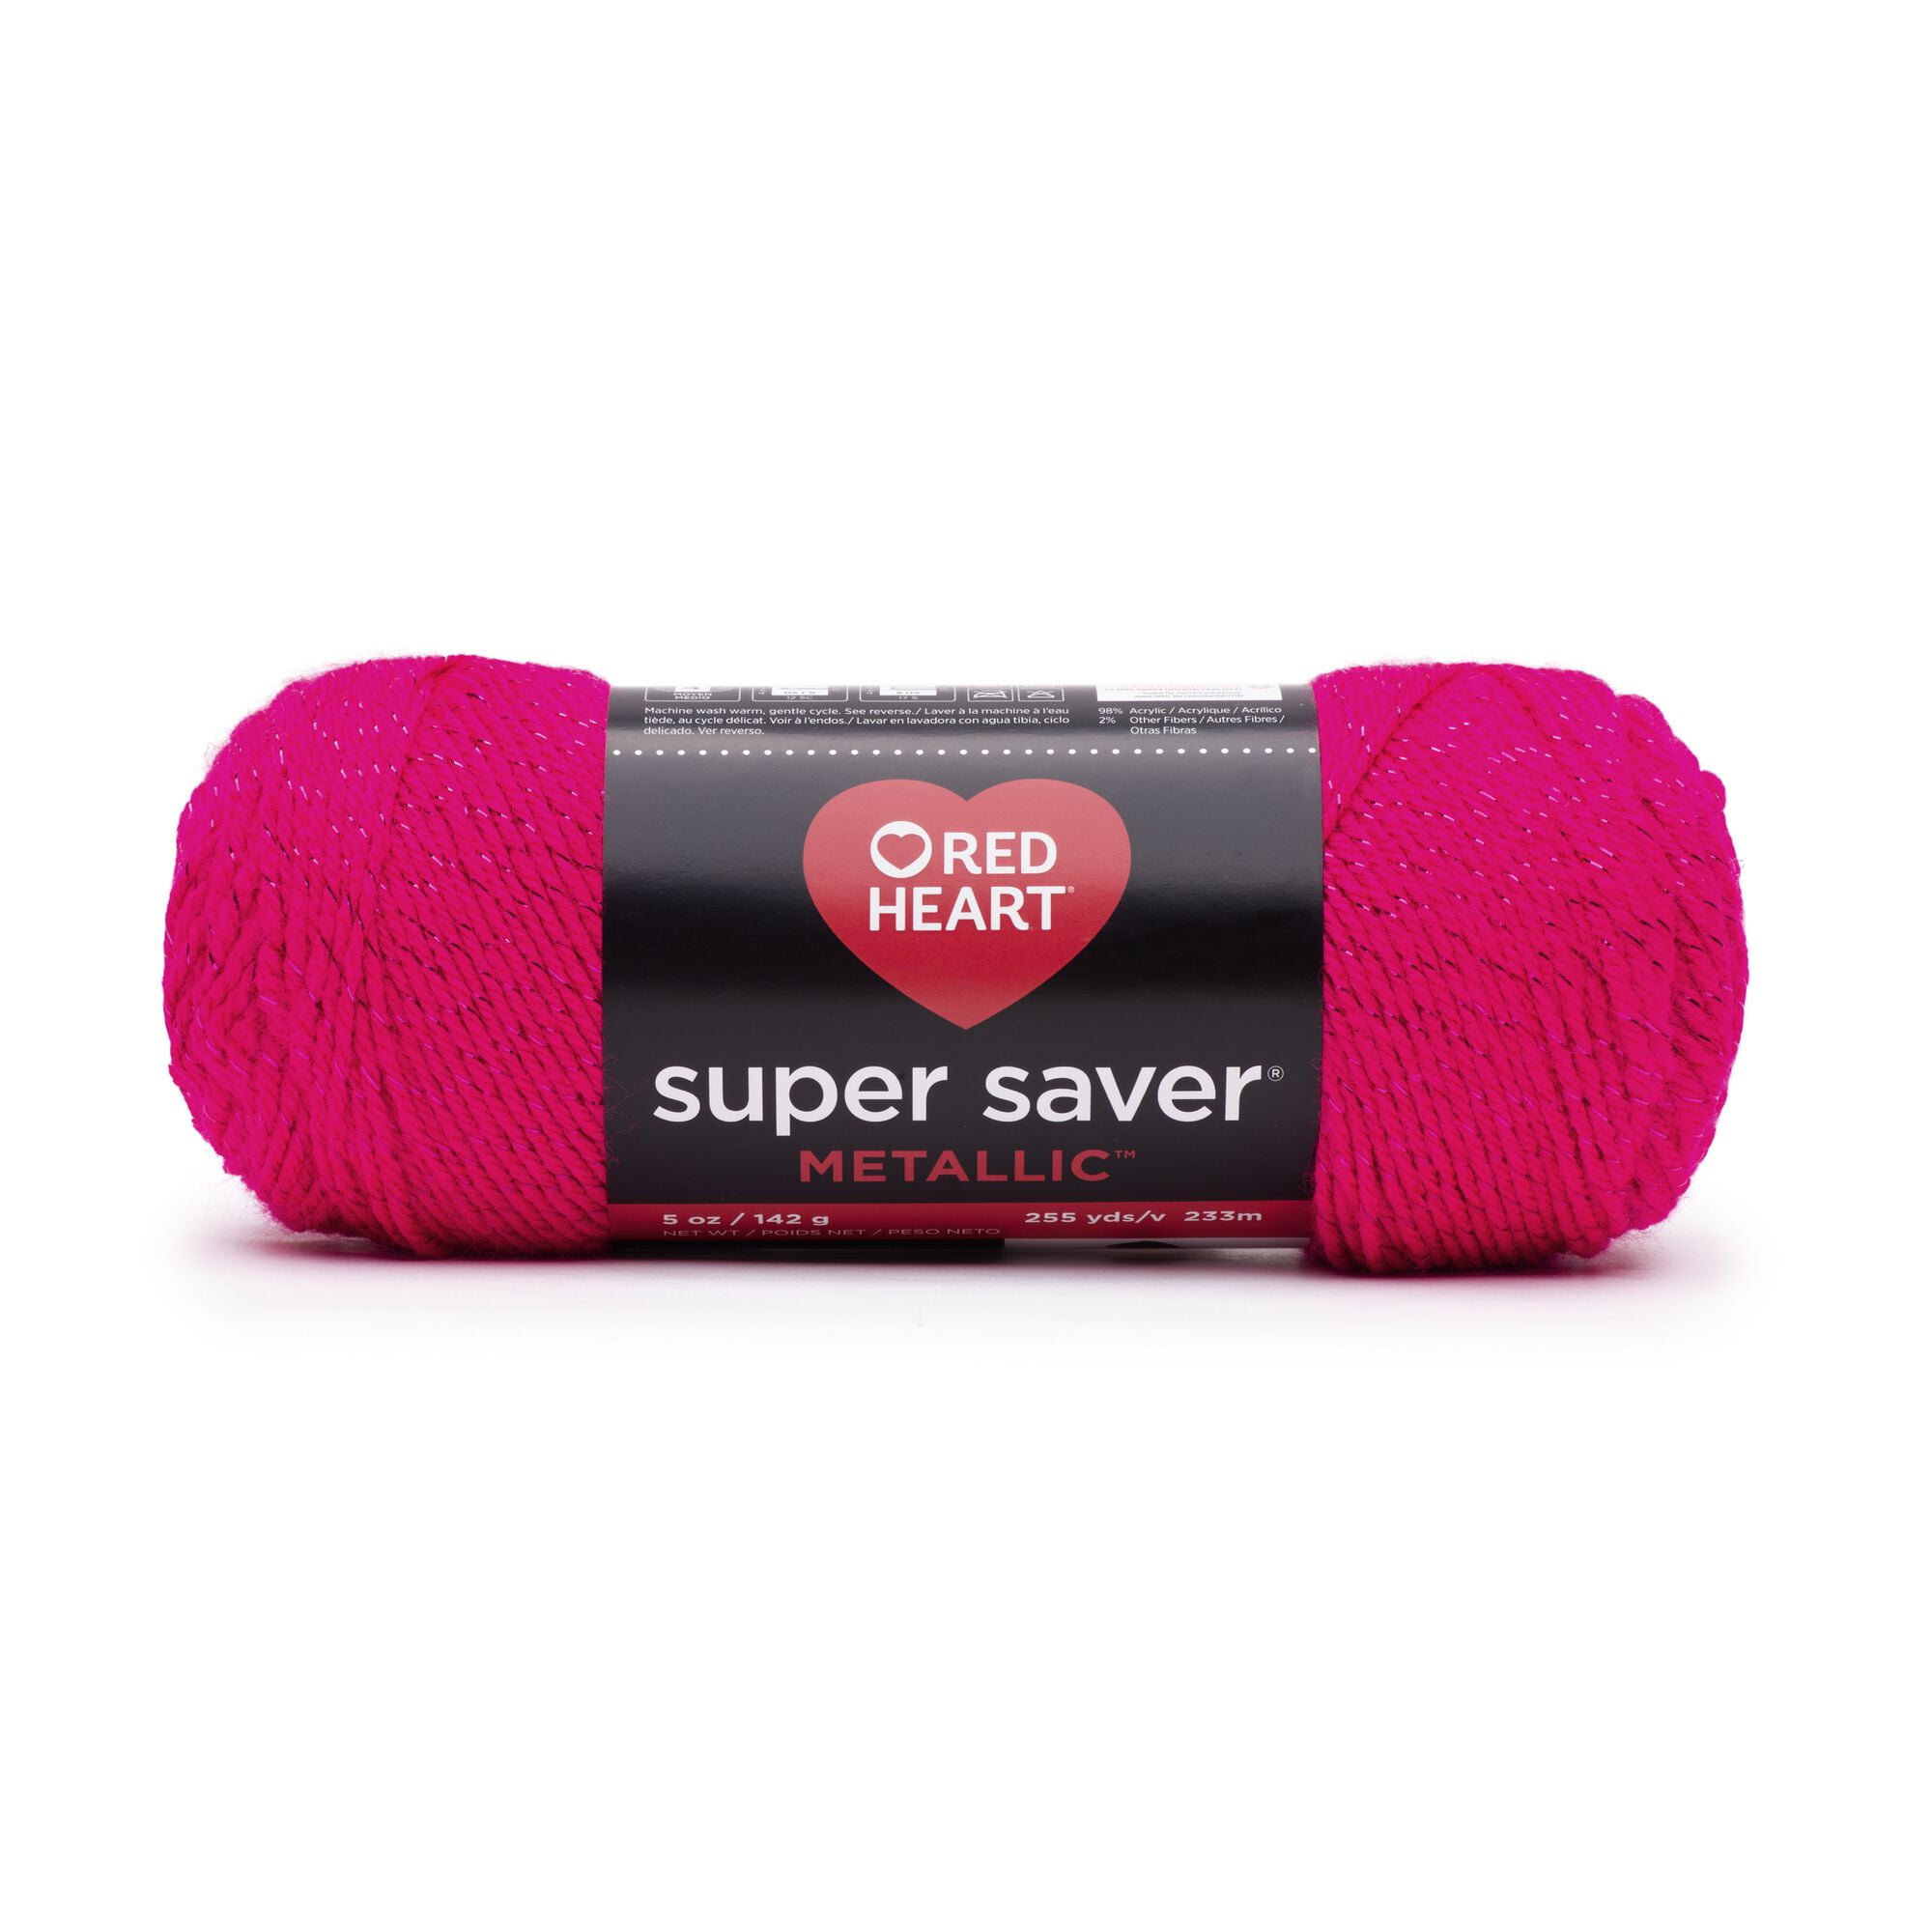 Red Heart Super Saver Metallic red Yarn - 3 Pack of 5oz/142g - Acrylic - 4  Medium (Worsted) - 255 Yards - Knitting/Crochet